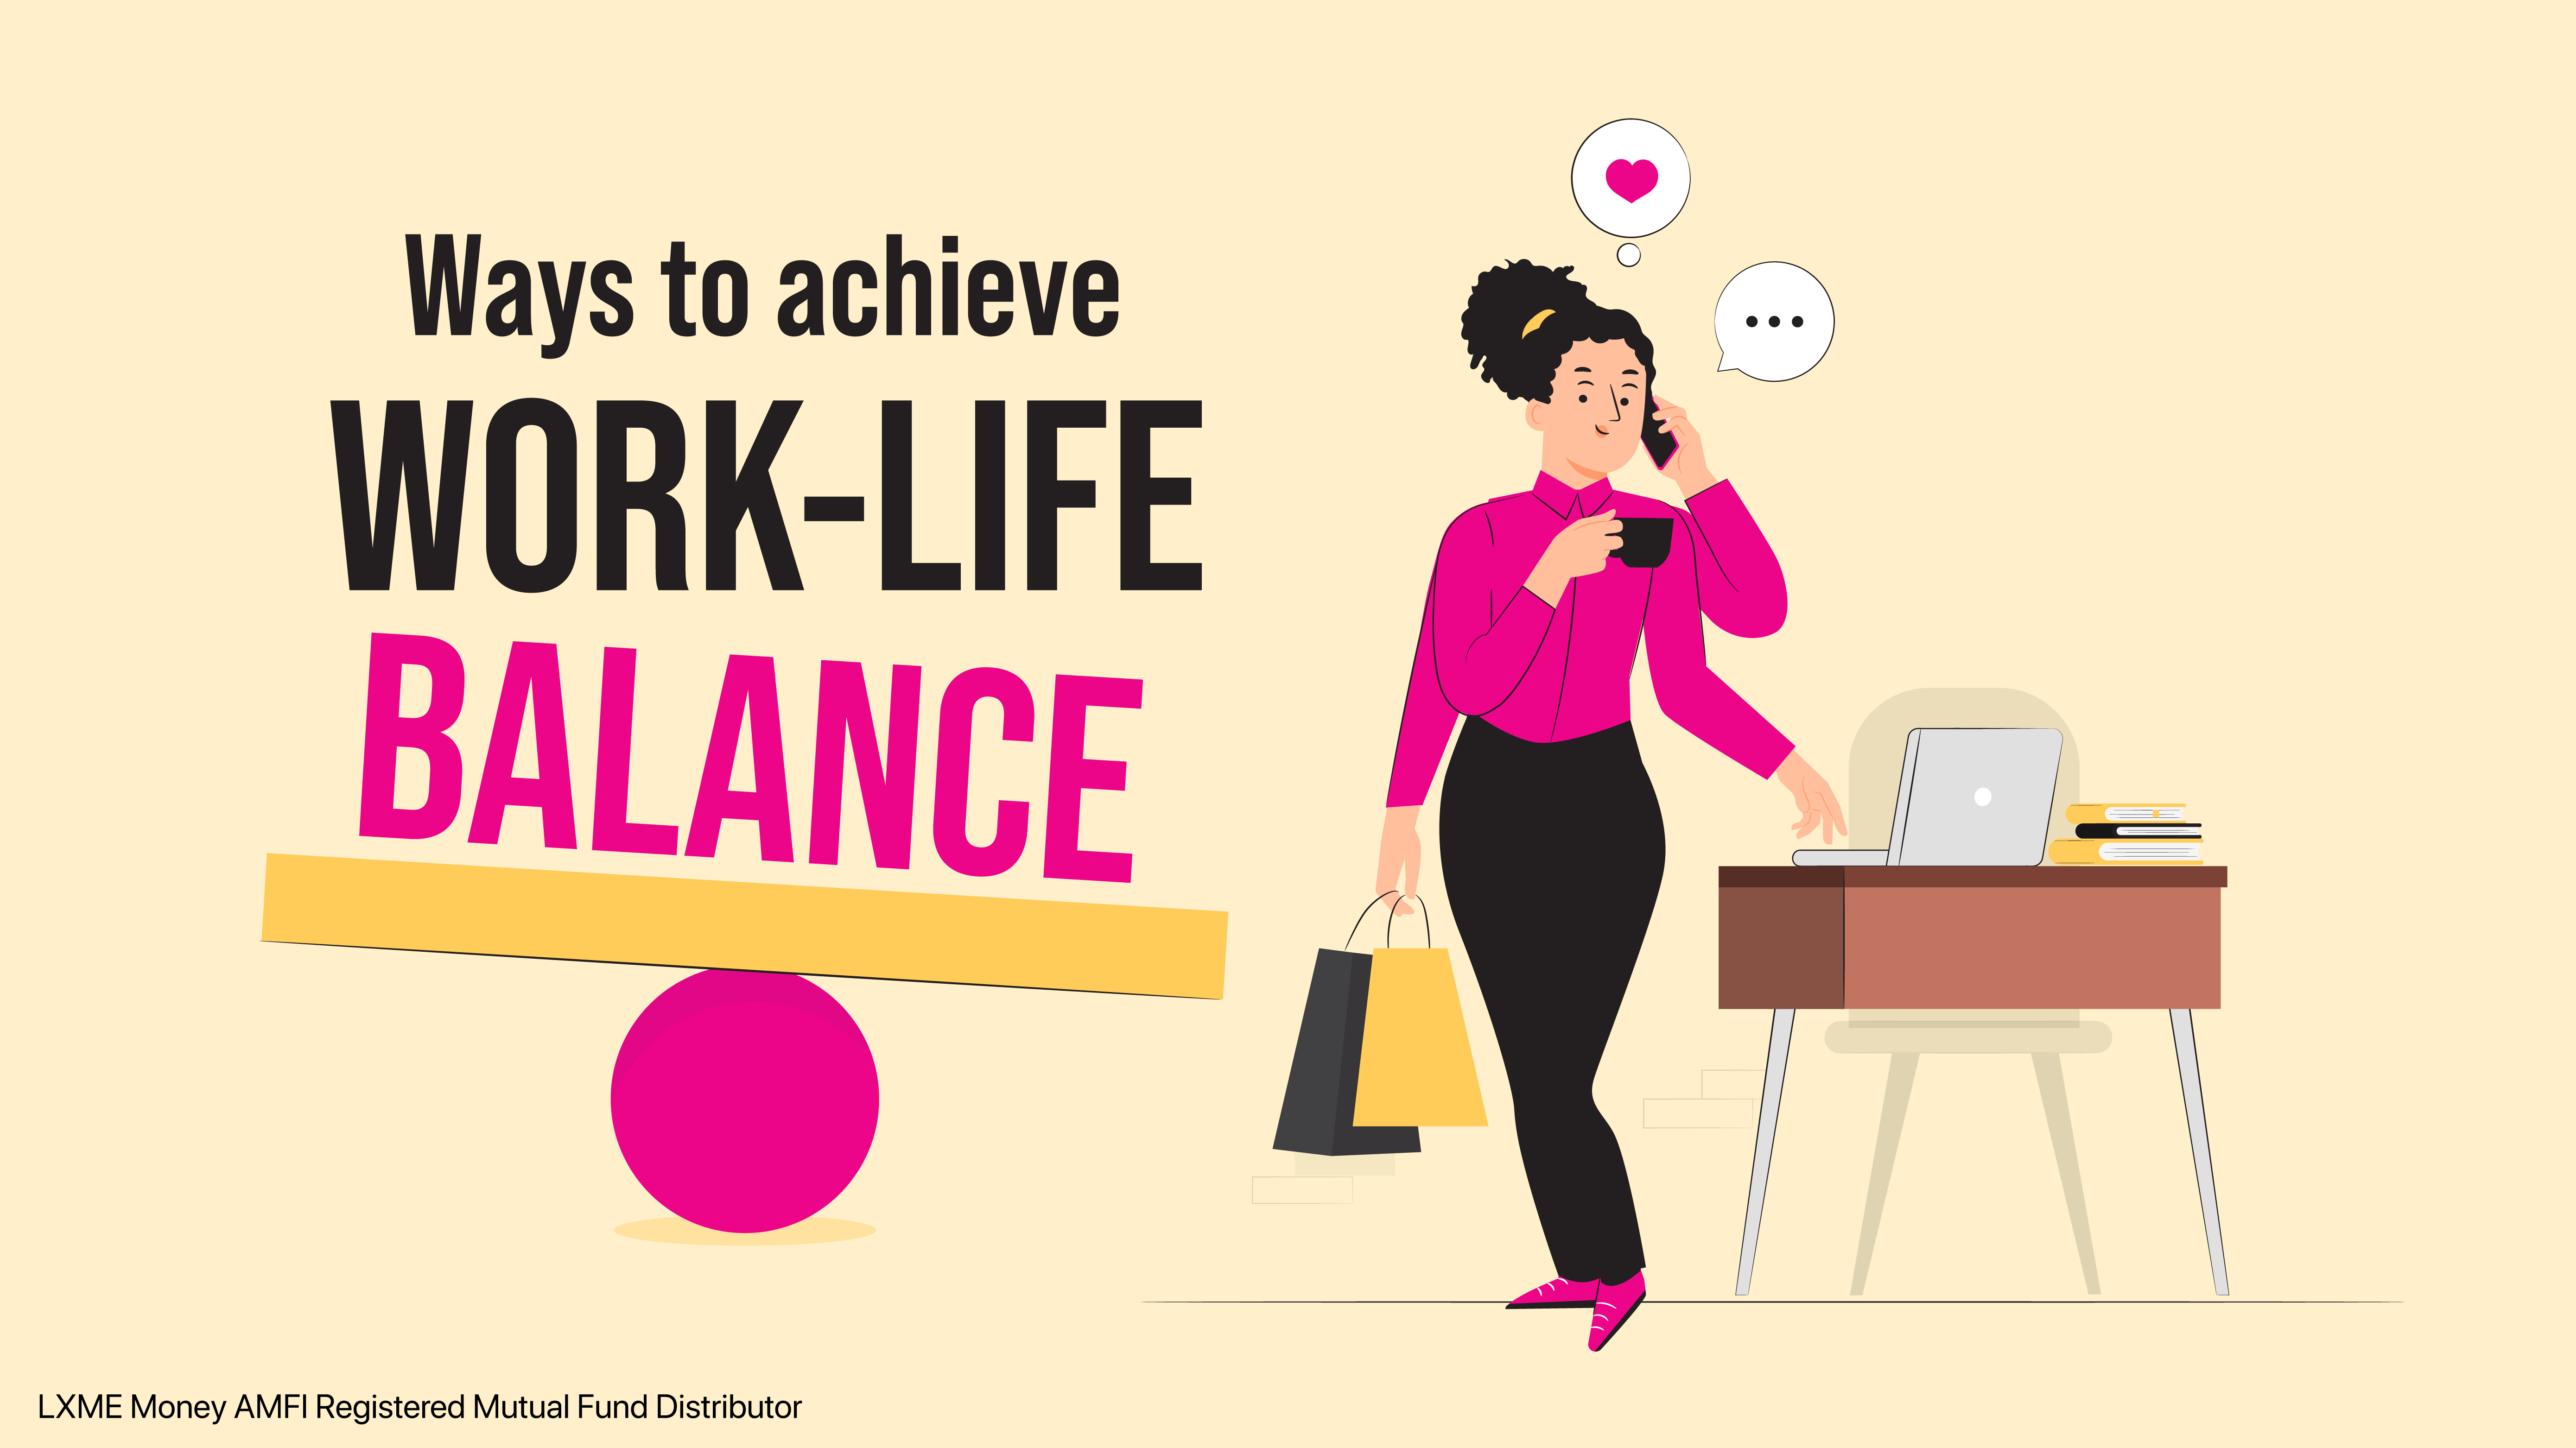 Work Life Balance for Women